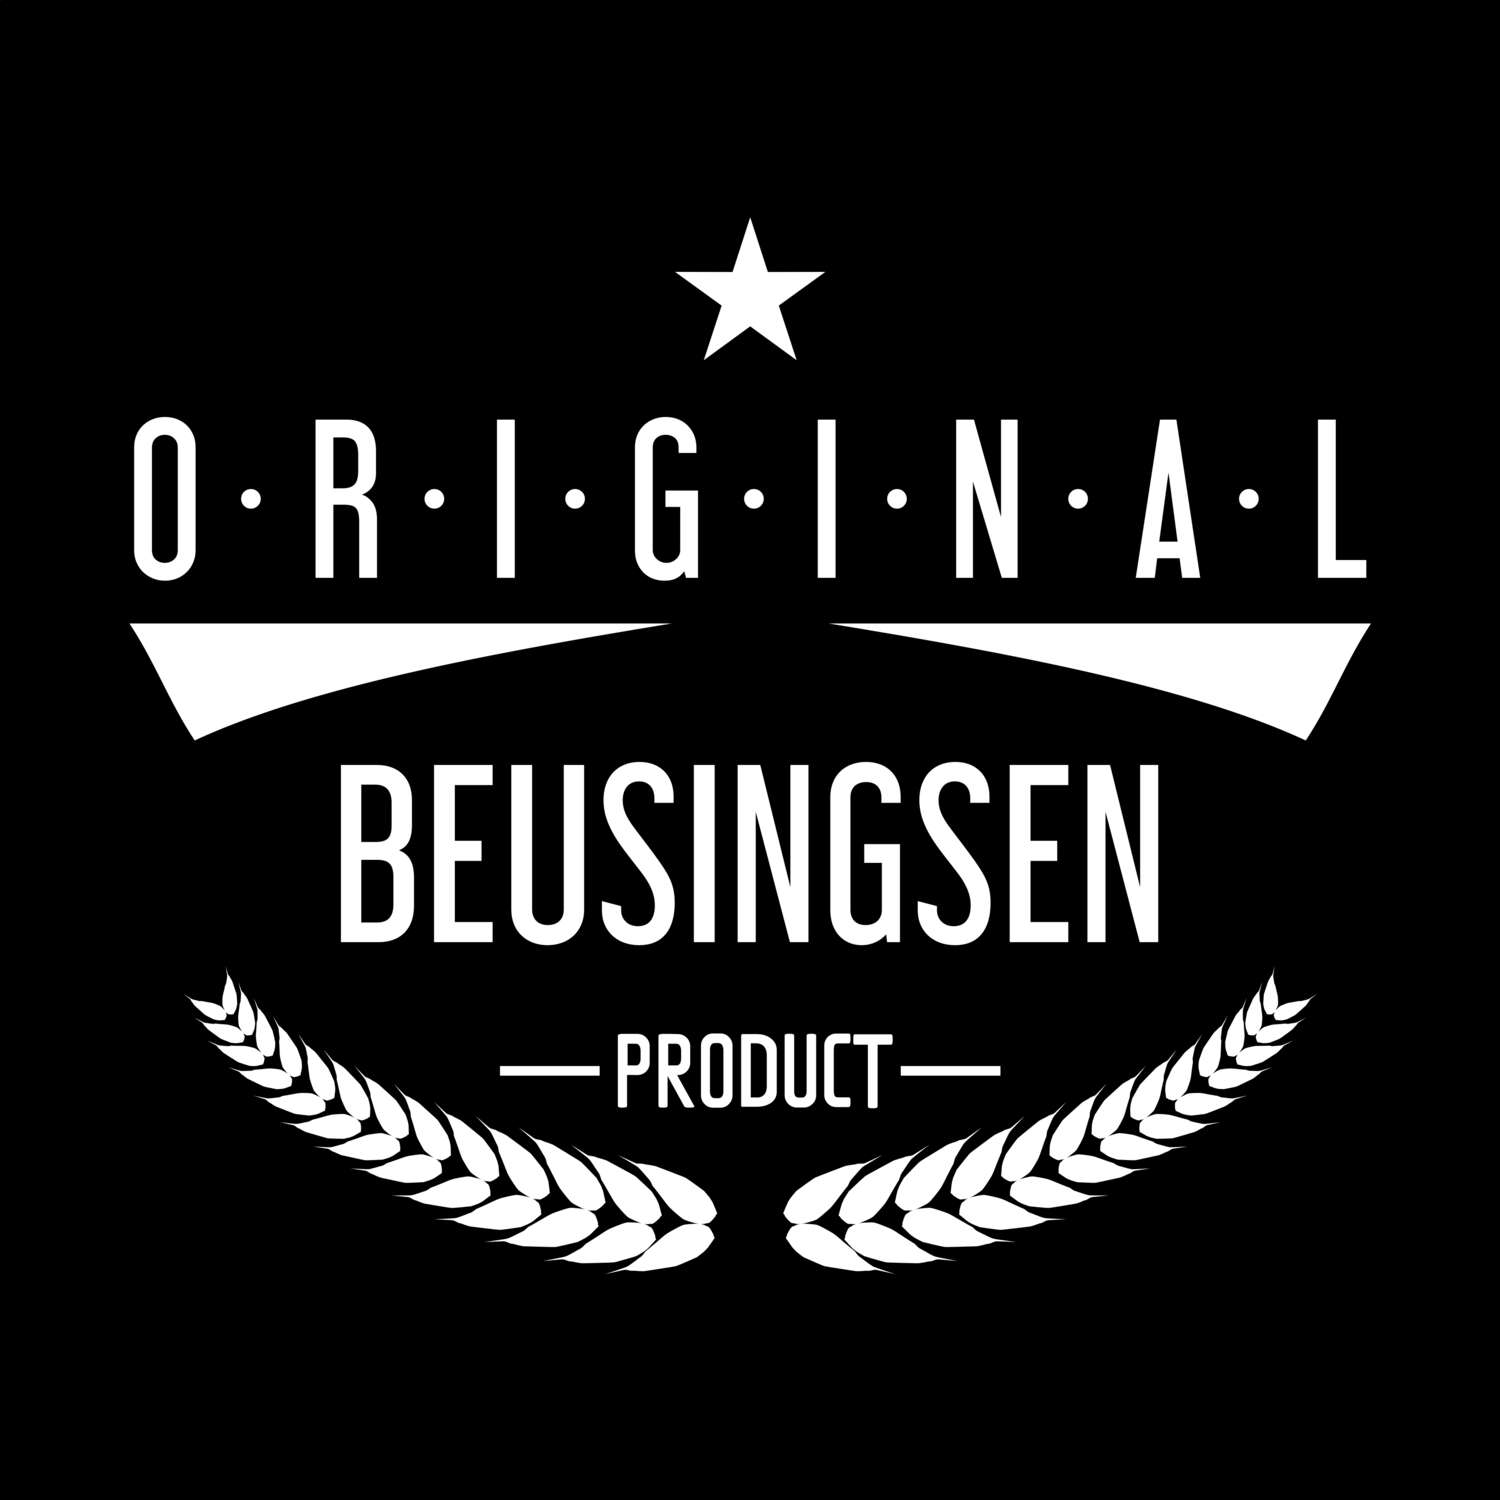 Beusingsen T-Shirt »Original Product«